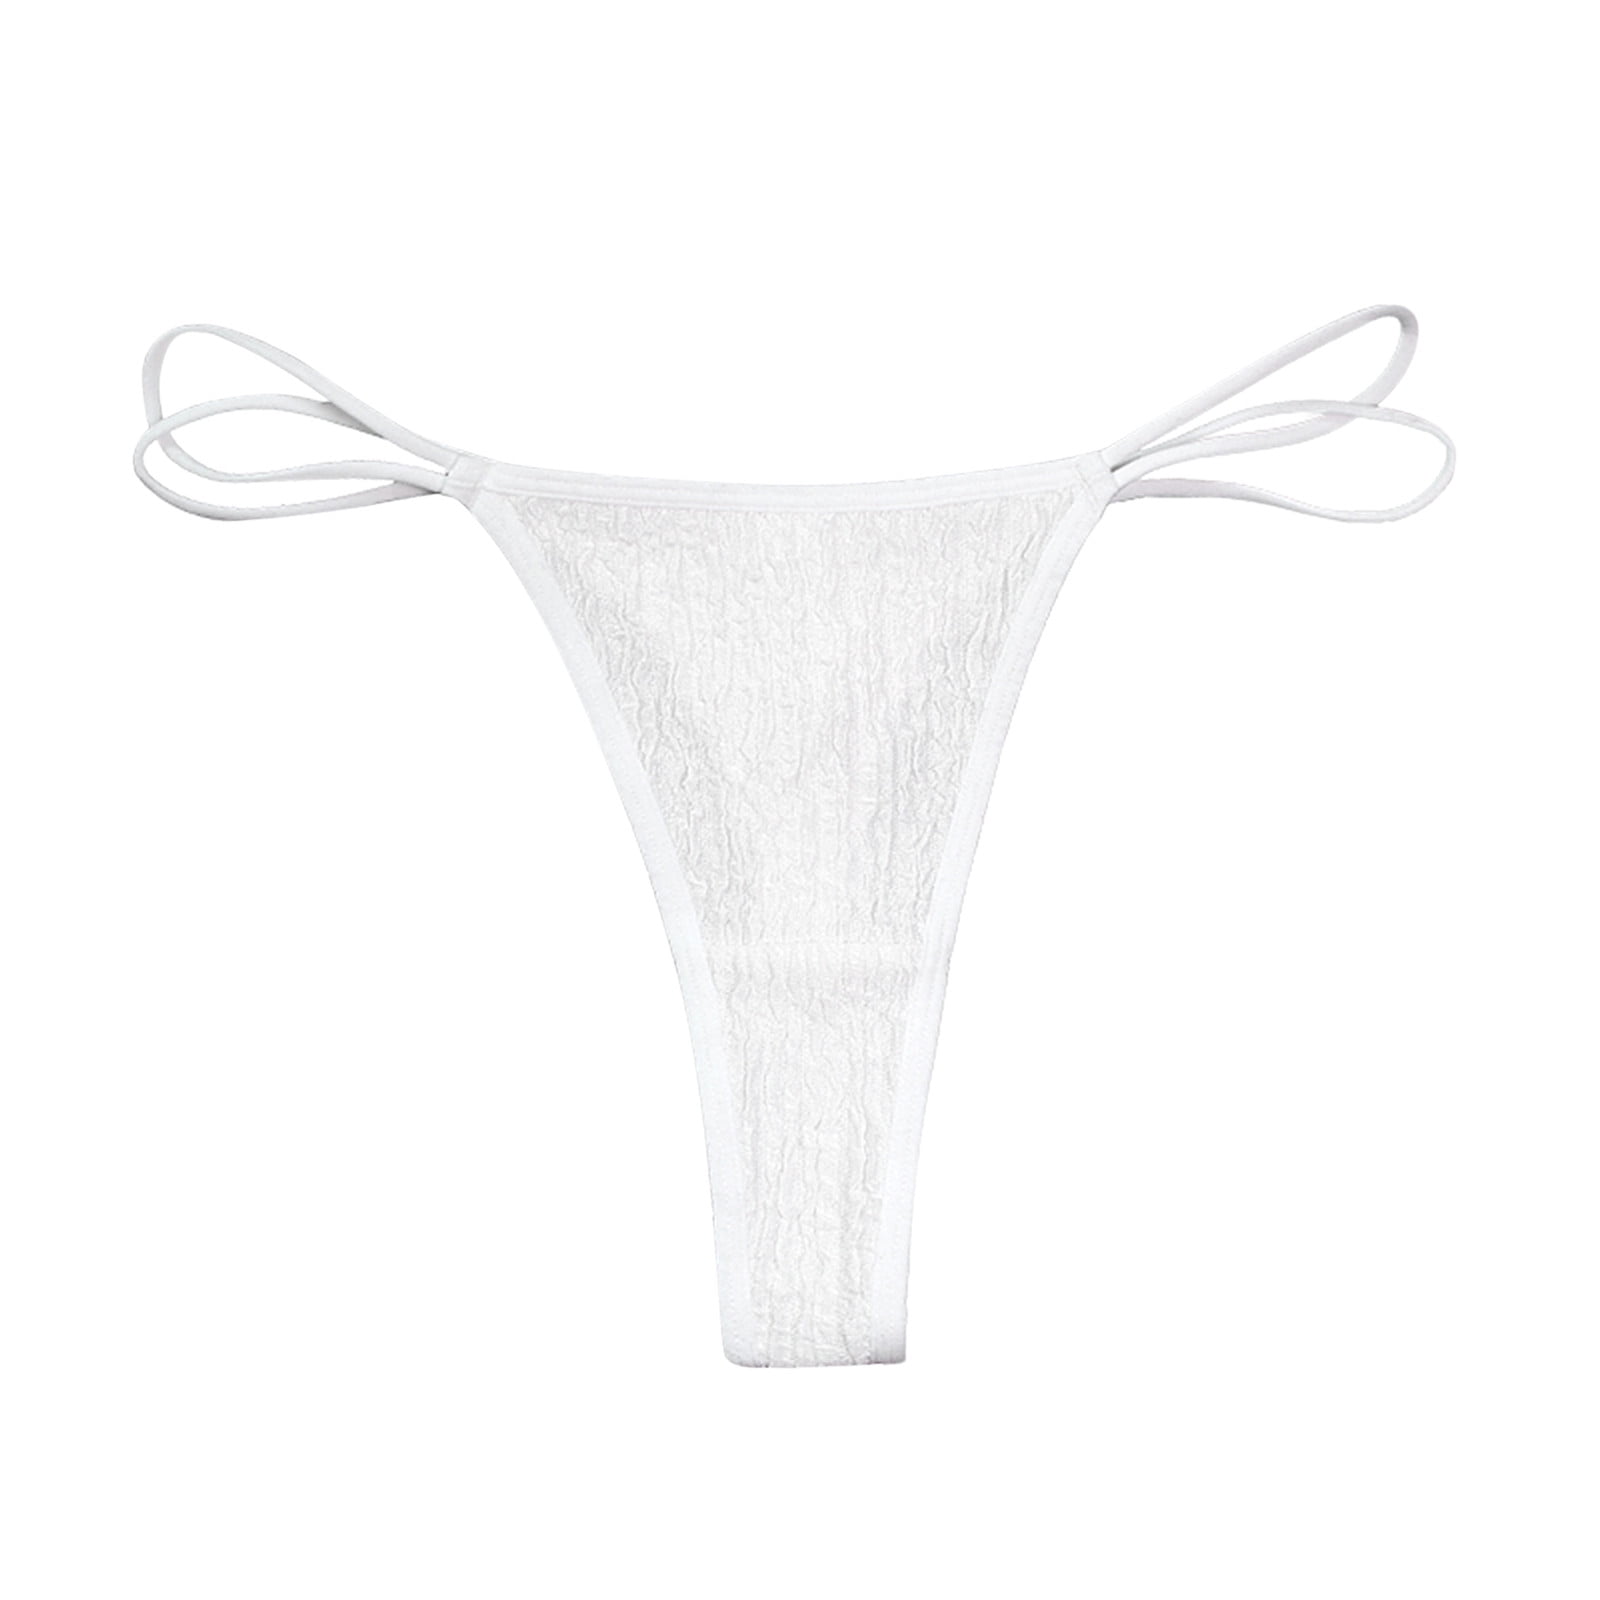 Cotton Underwear For Women Bikini Panty Soft Full Back Coverage Briefs 4  Pack